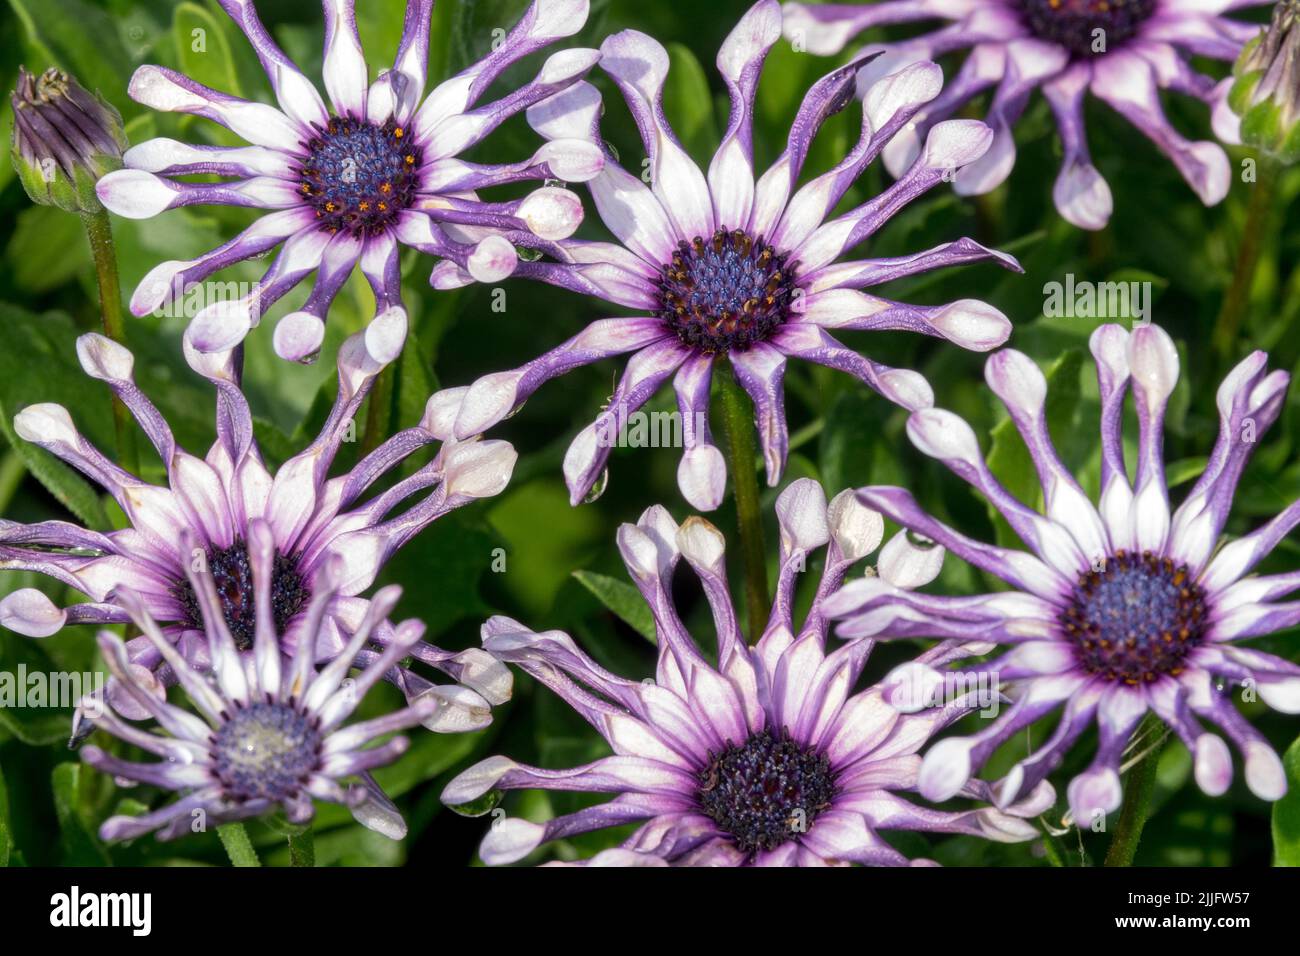 Annual, Daisies, Blue white, Osteospermum, 'White Spoon', Flowers, Cape daisy, African daisy, Bright, Daisy plant Osteospermum Stock Photo